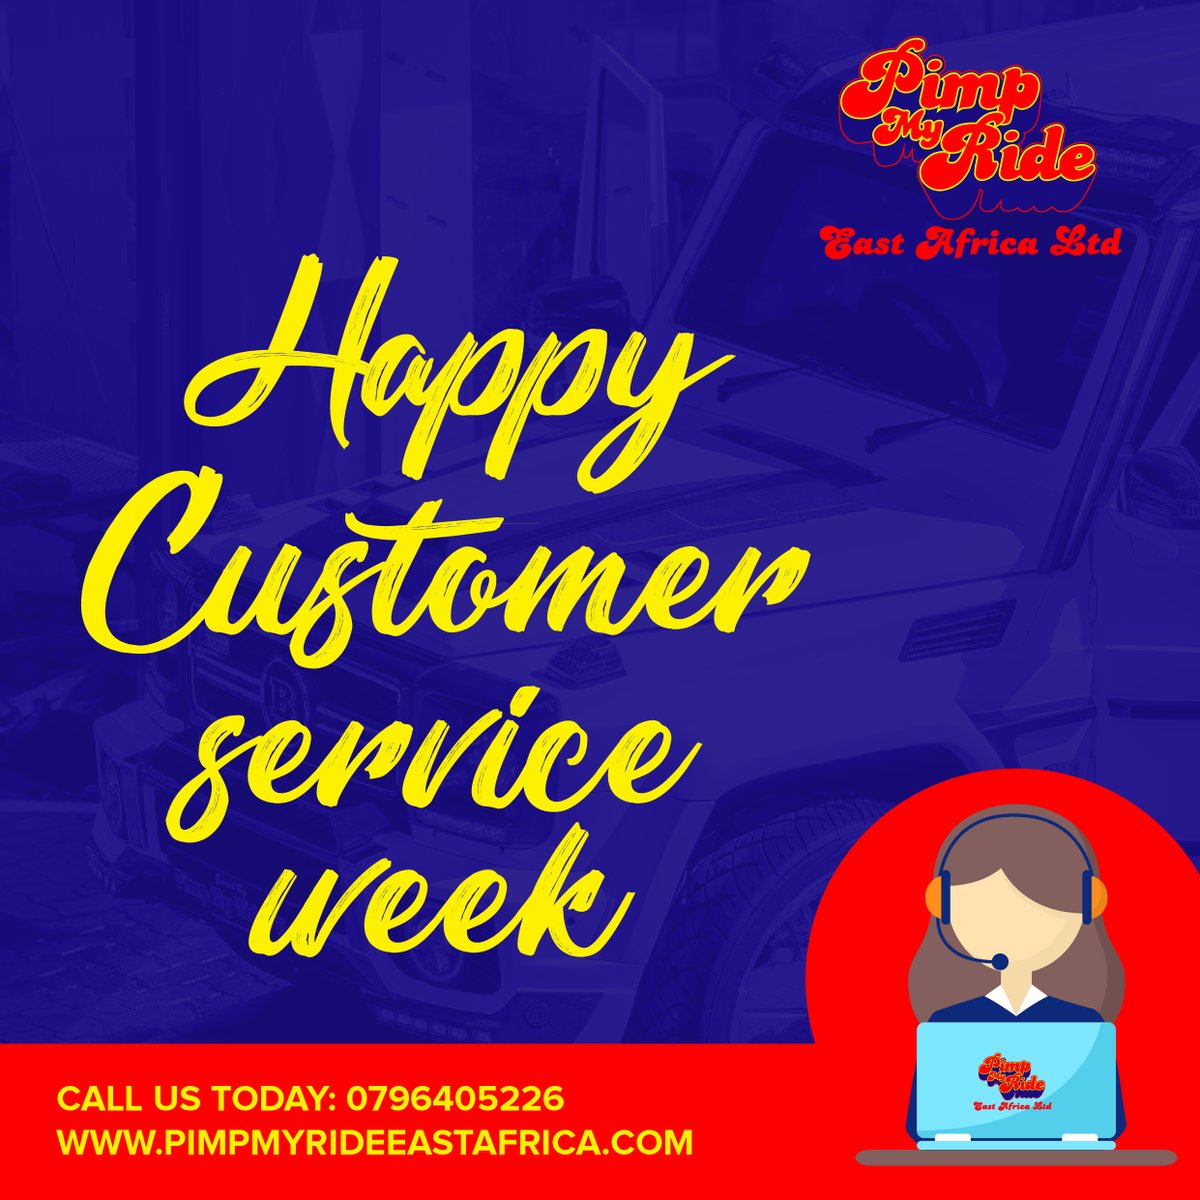 Happy Customer Service Week. #pimpmyride #eastafrica #customerserviceweek #customerexperience #customersatisfaction